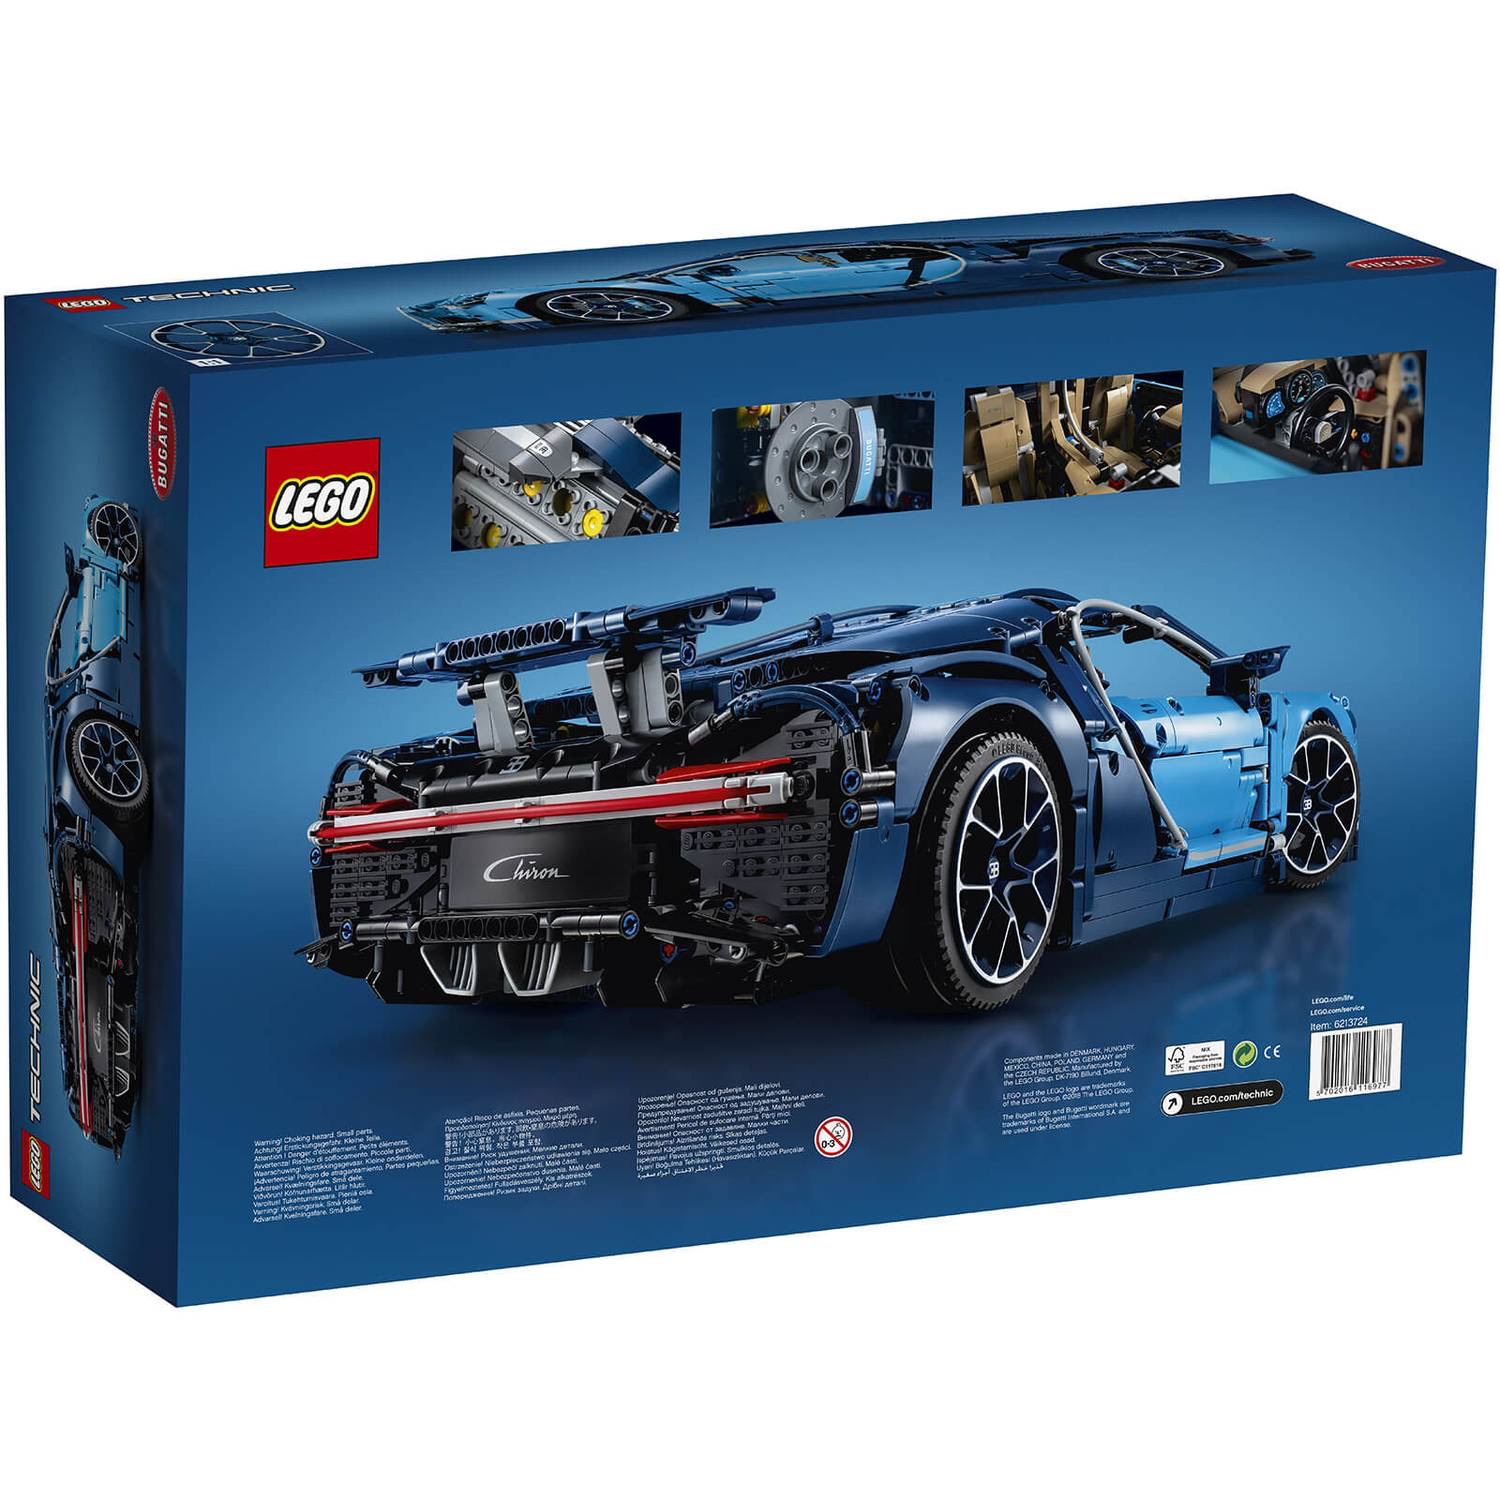 LEGO Technic: Bugatti Chiron Sports Race Car Model (42083) Toys - Zavvi US